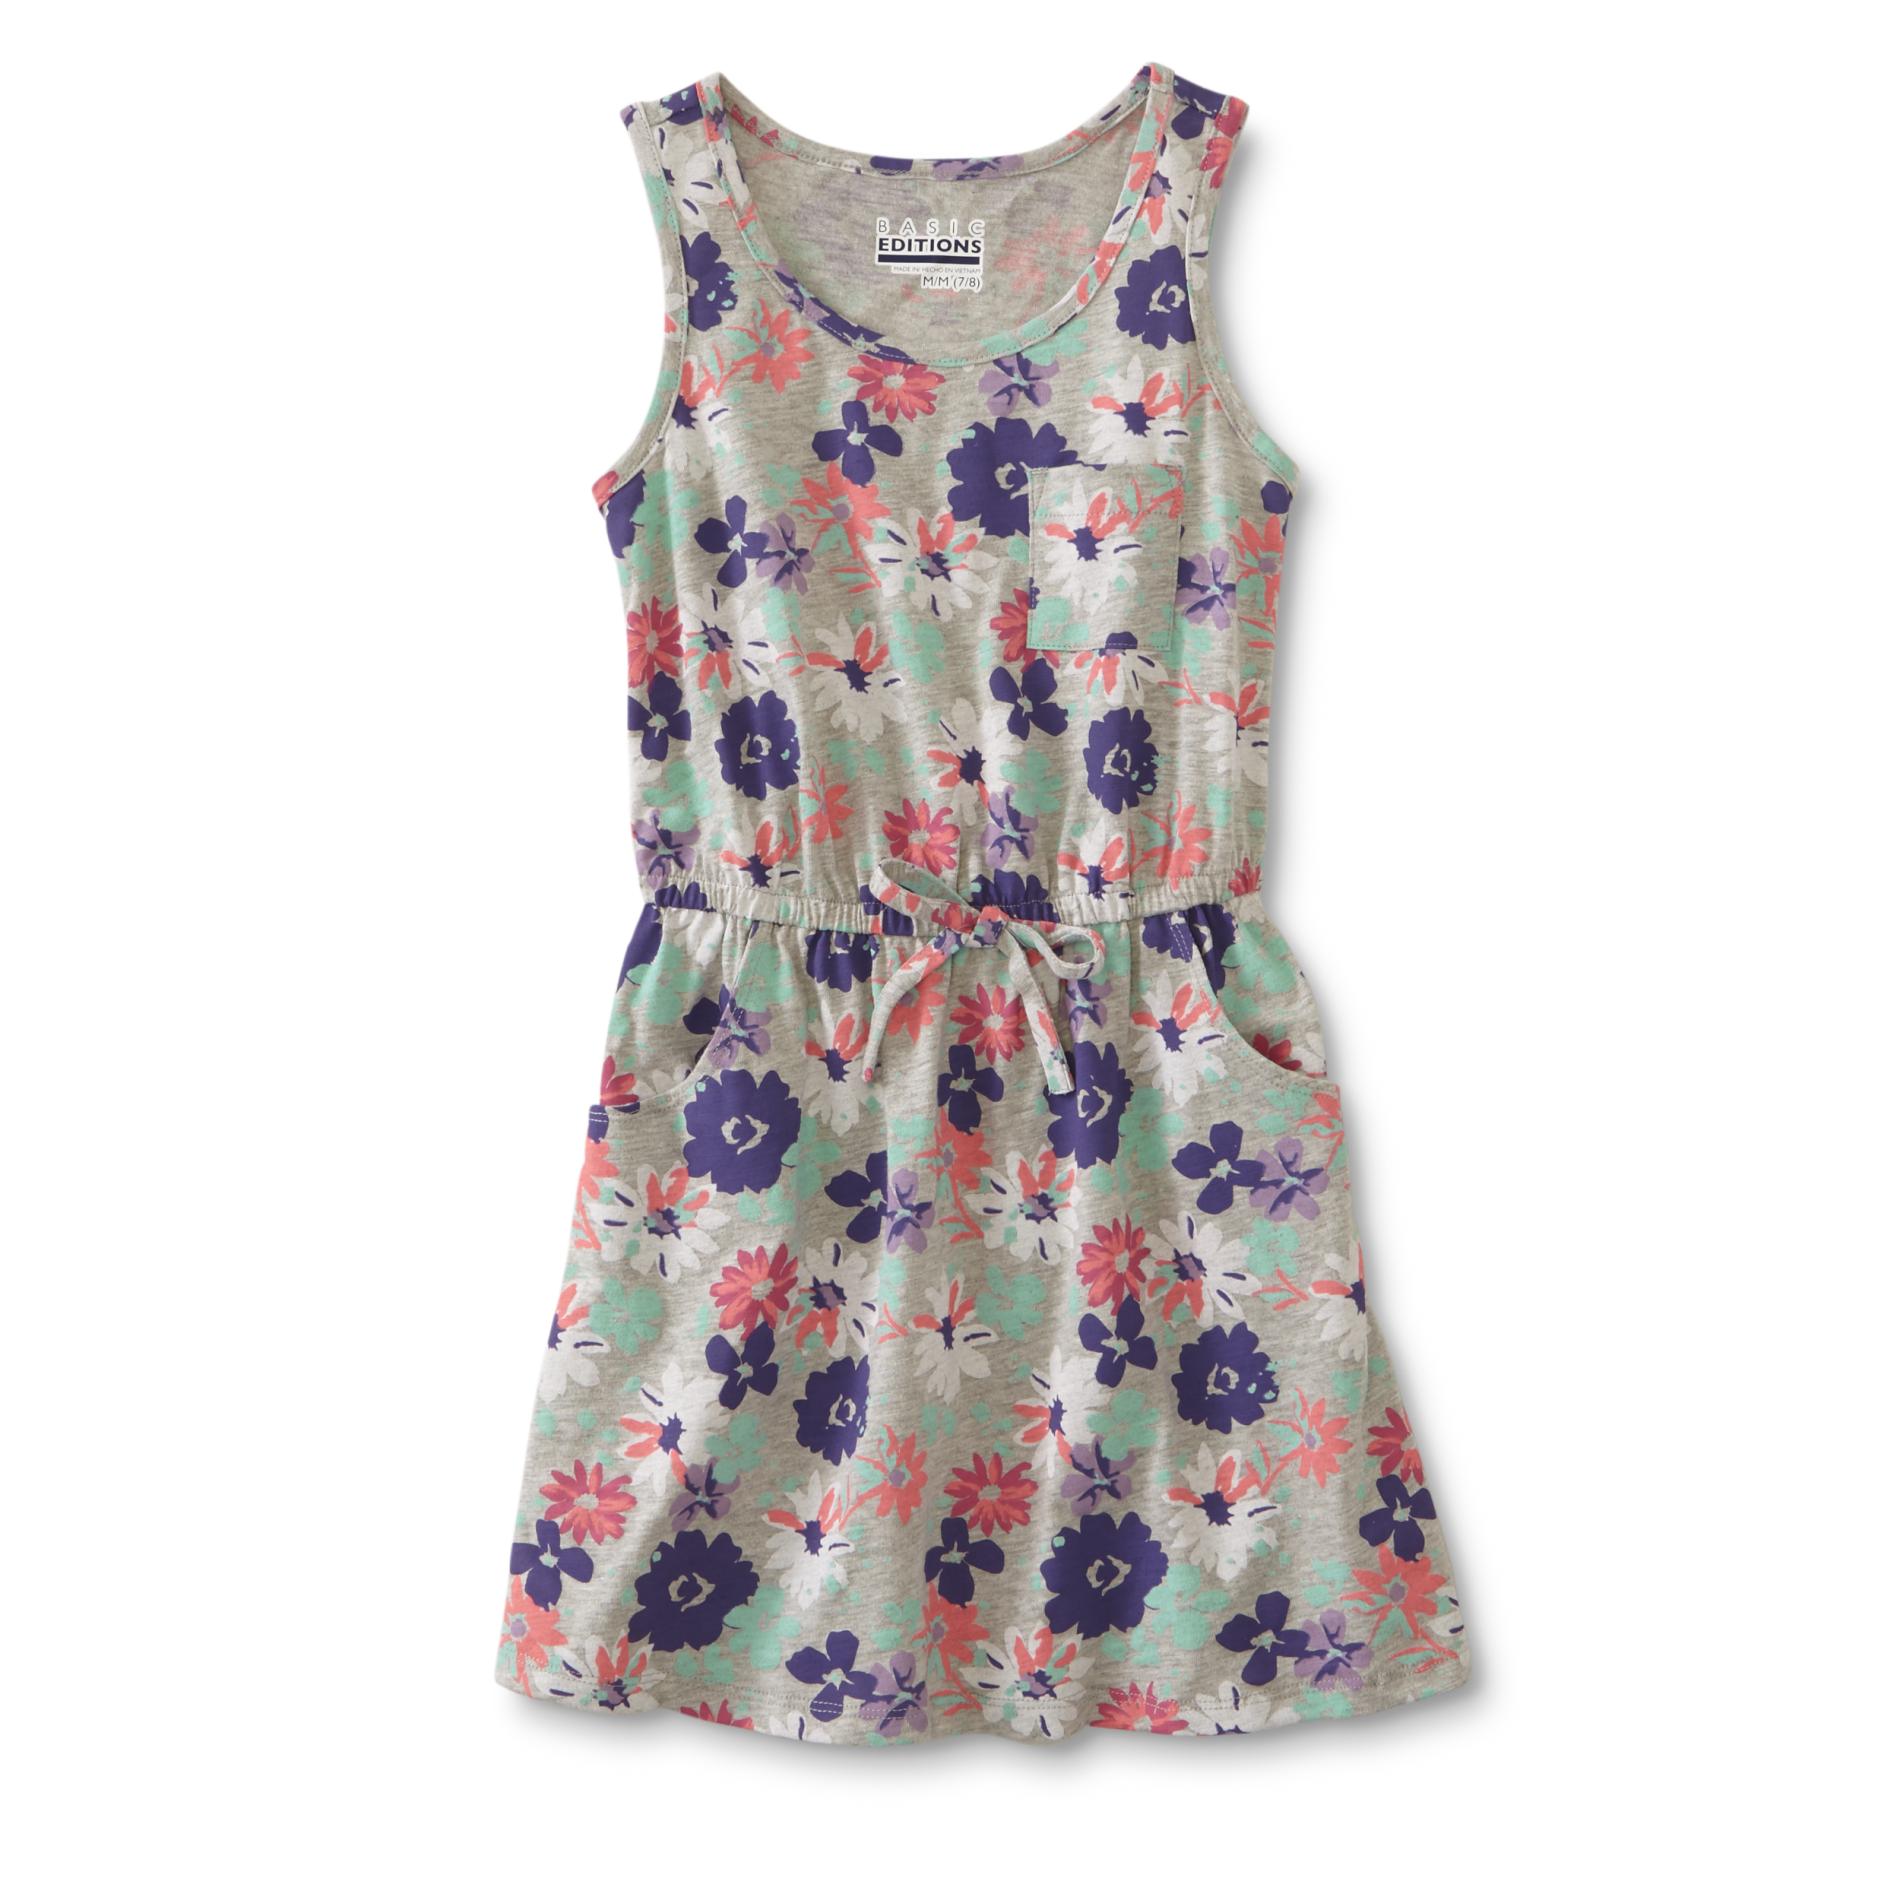 Basic Editions Girls' Sleeveless Dress - Floral